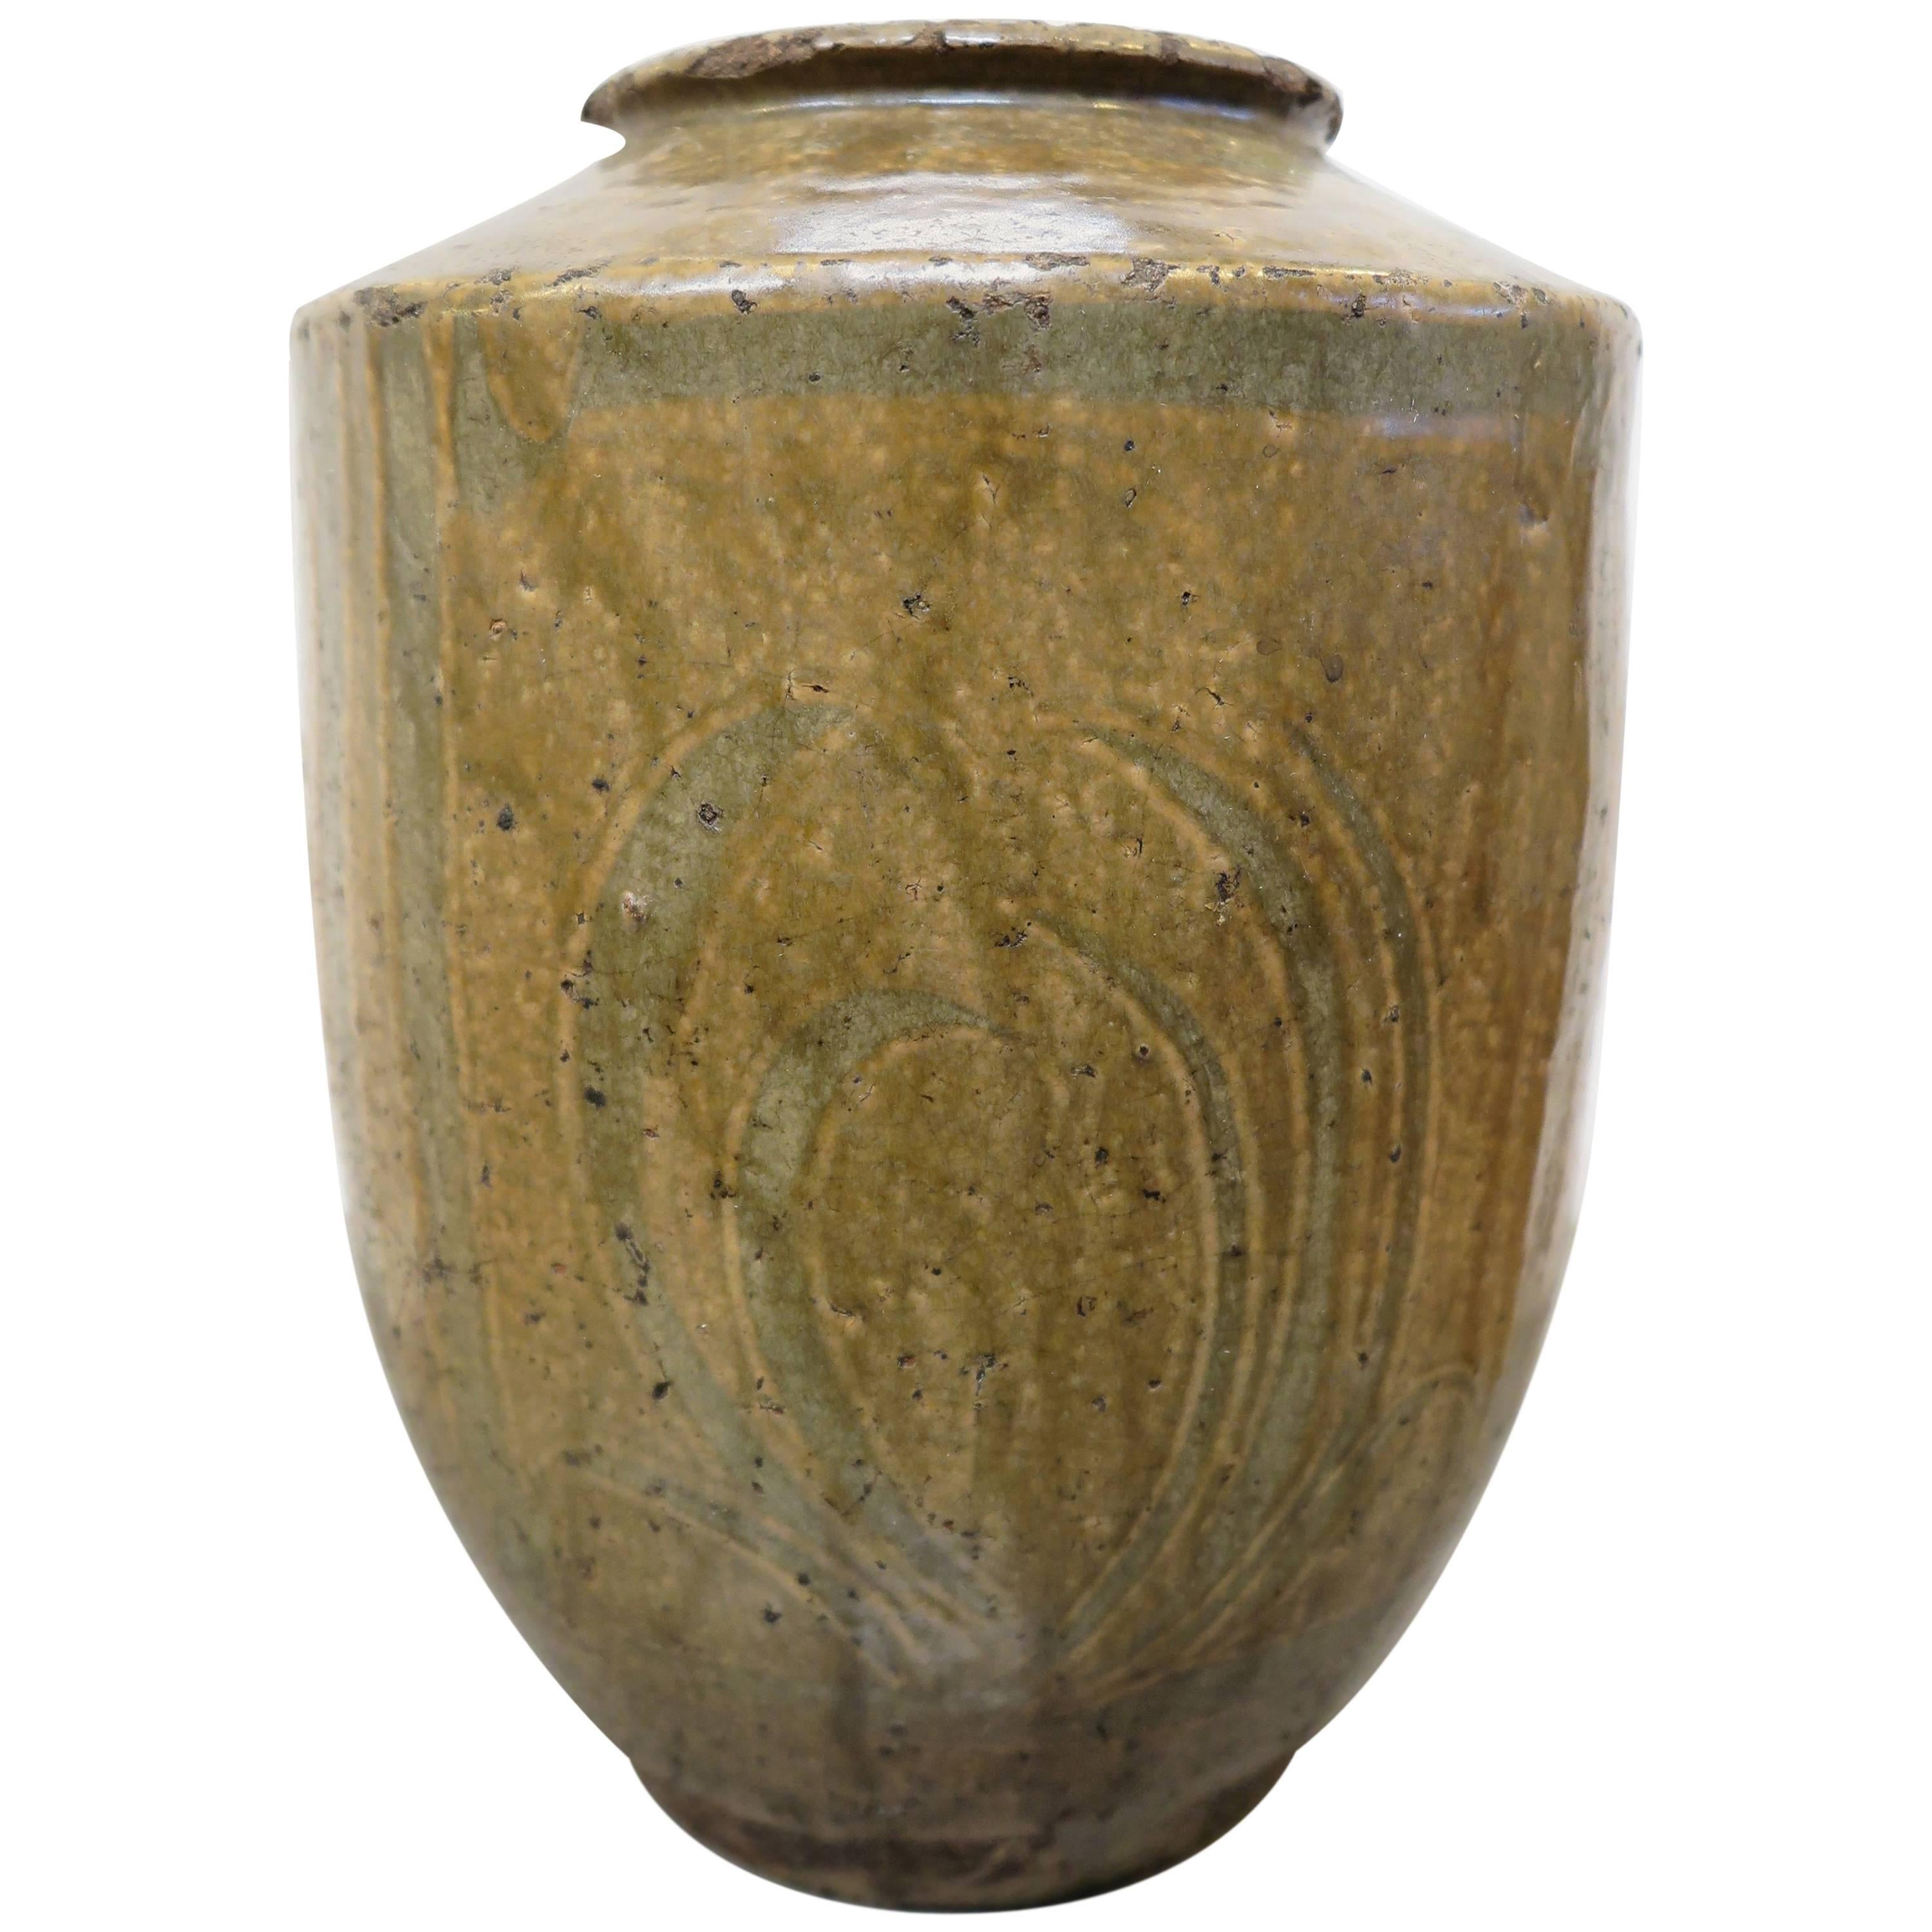 19th Century Stoneware Jar